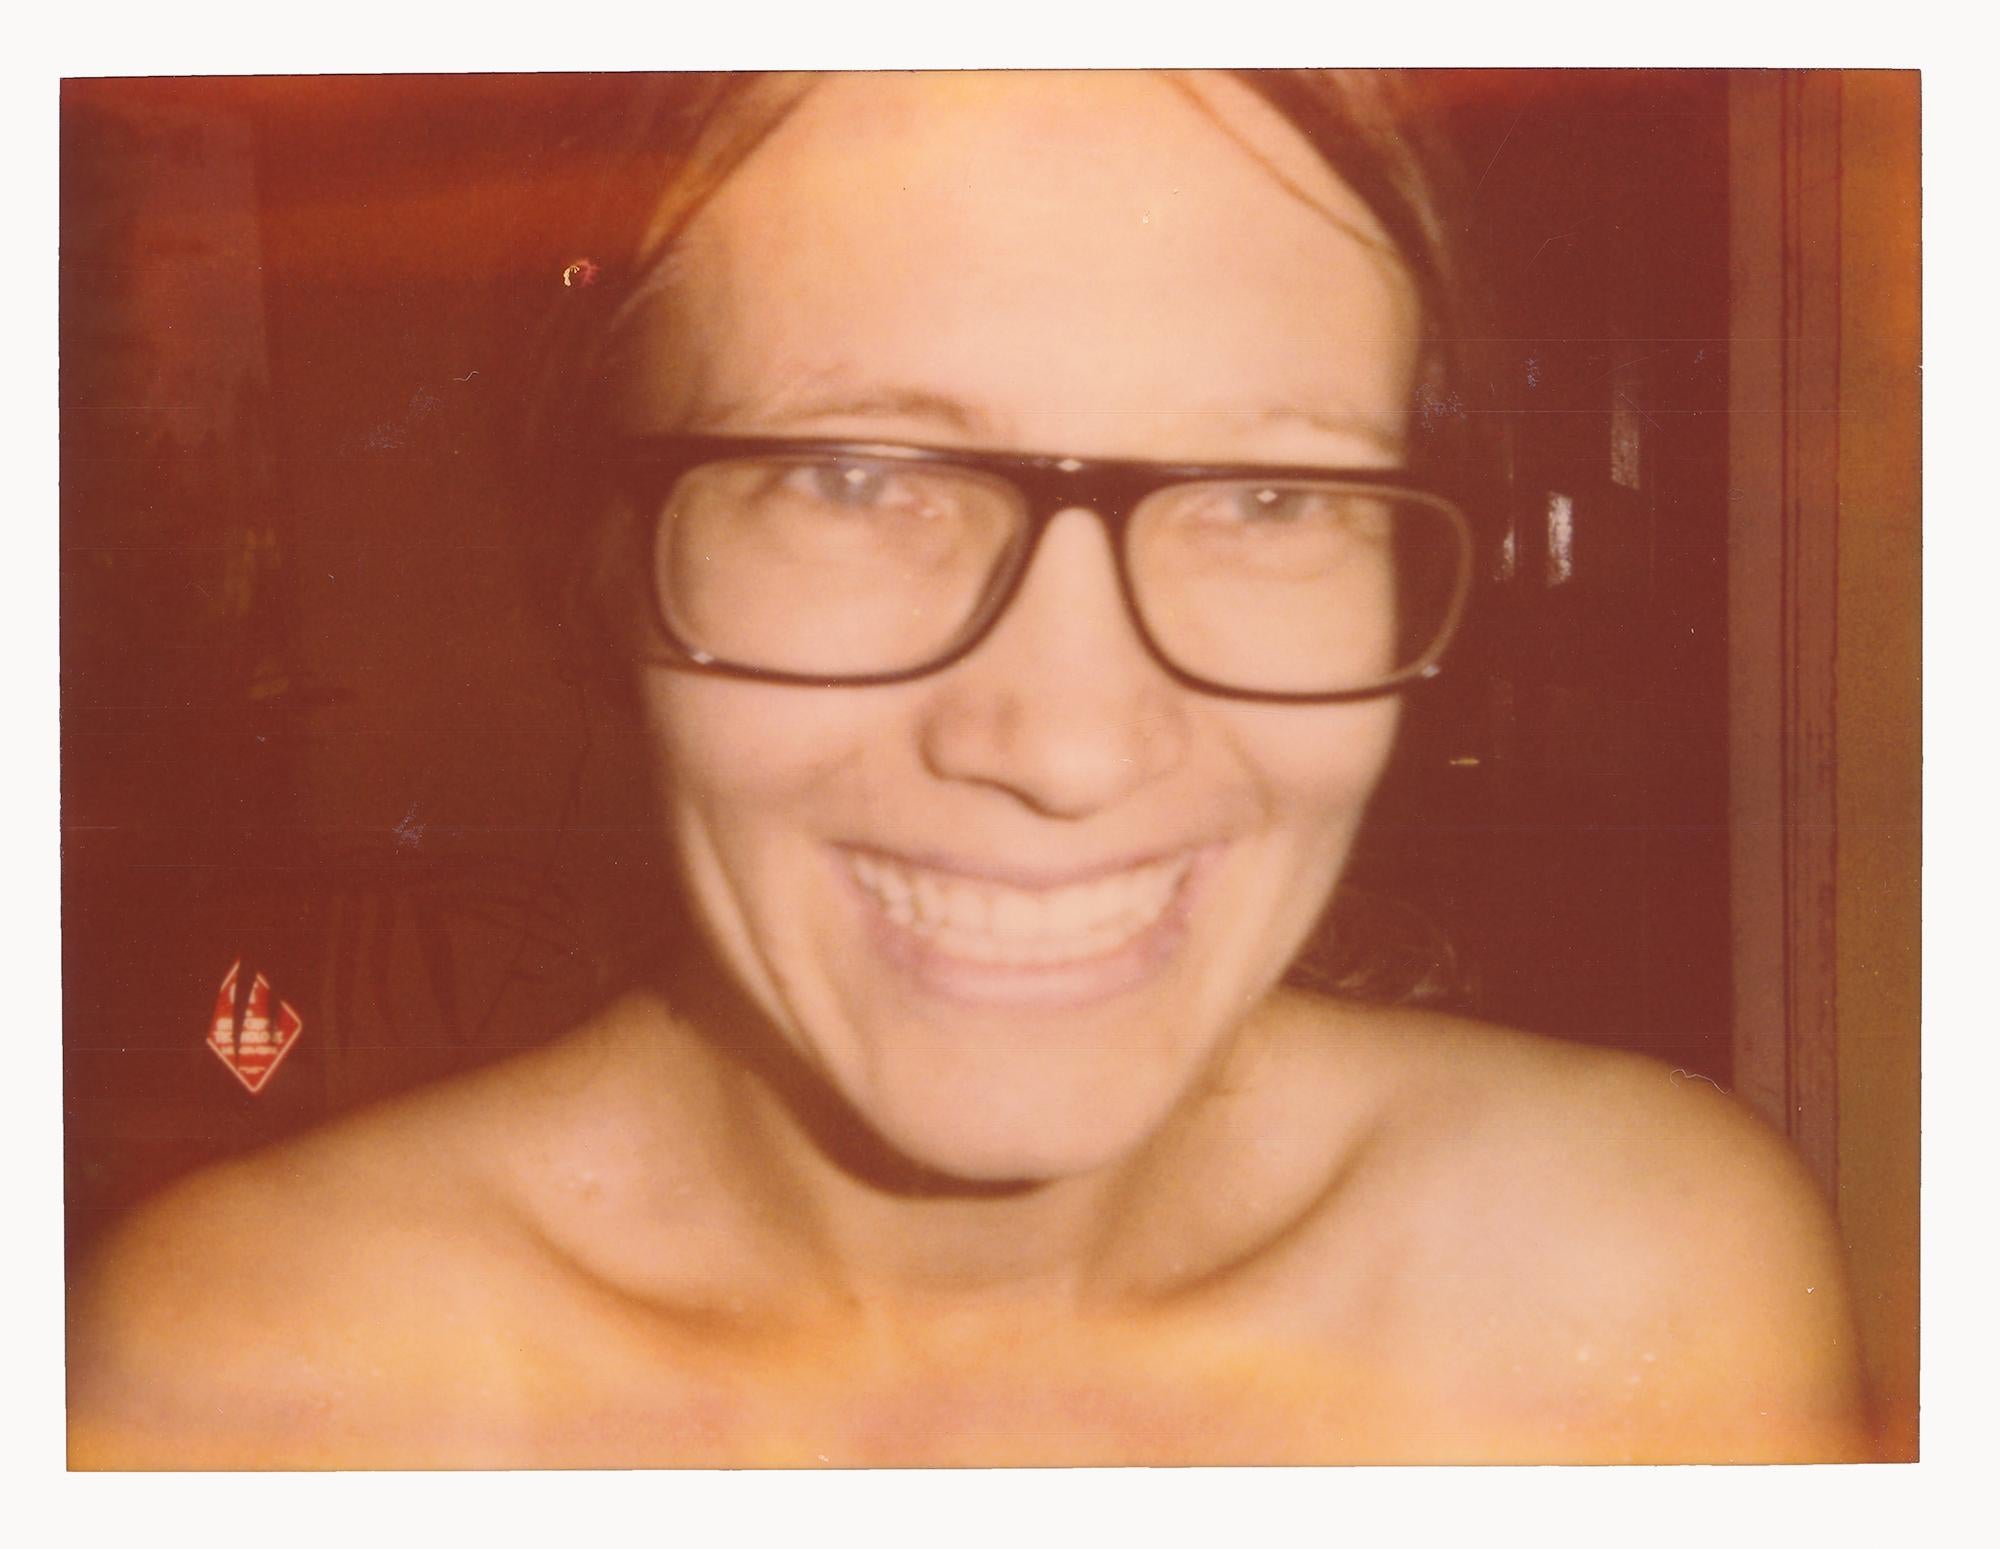 Small Breasts (Strange Love) - analog, mounted - Photograph by Stefanie Schneider